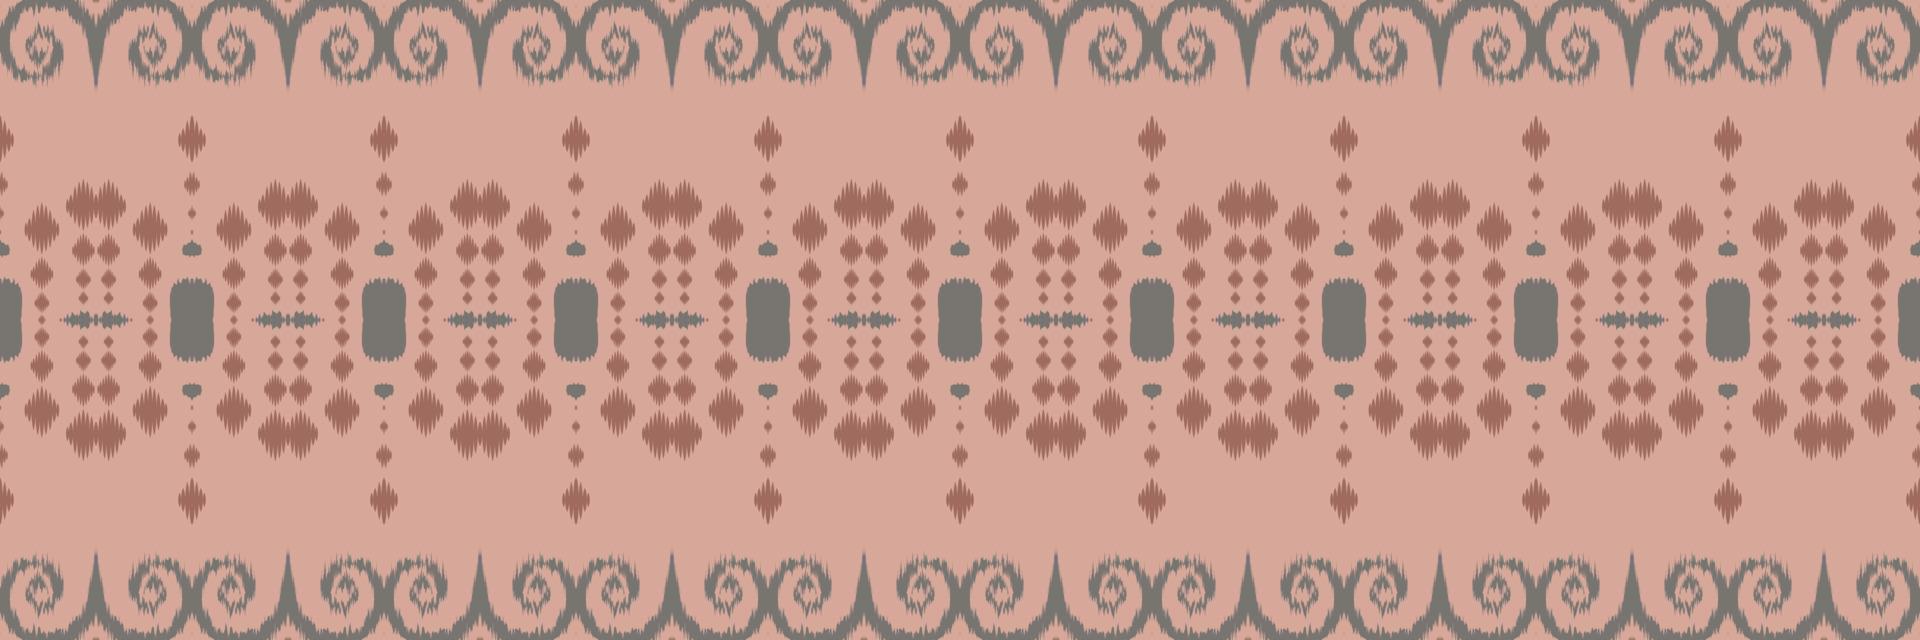 ikat sömlös stam- konst sömlös mönster. etnisk geometrisk ikkat batik digital vektor textil- design för grafik tyg saree mughal borsta symbol strängar textur kurti kurtis kurtas